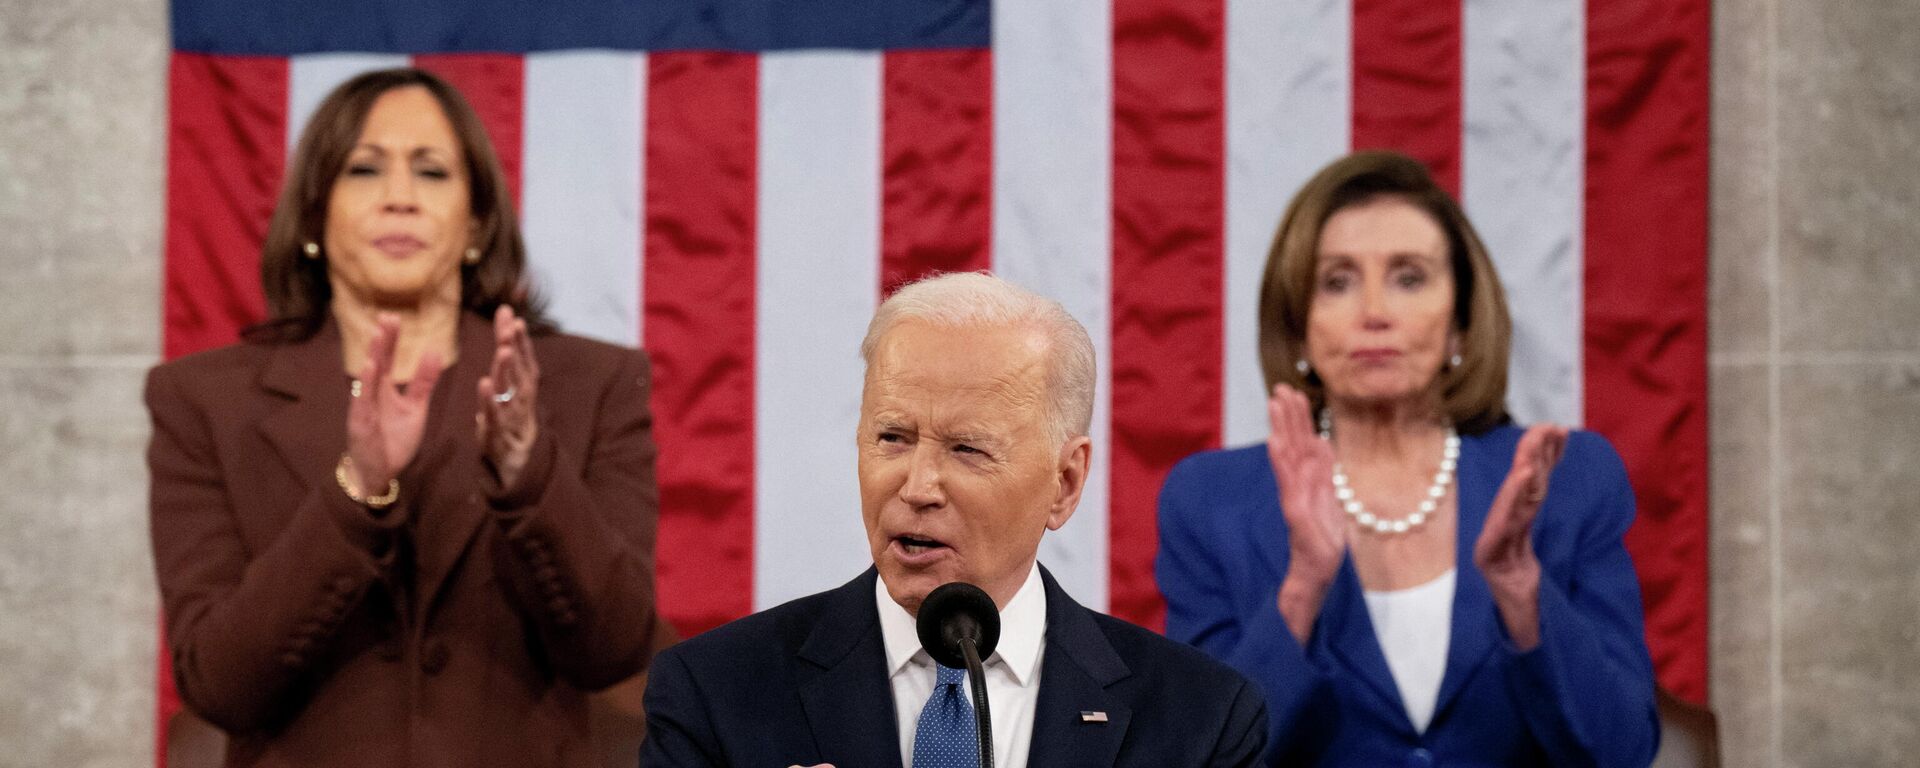 U.S. President Joe Biden delivers the State of the Union address at the U.S. Capitol in Washington, DC, U.S, March 1, 2022 - Sputnik International, 1920, 02.03.2022